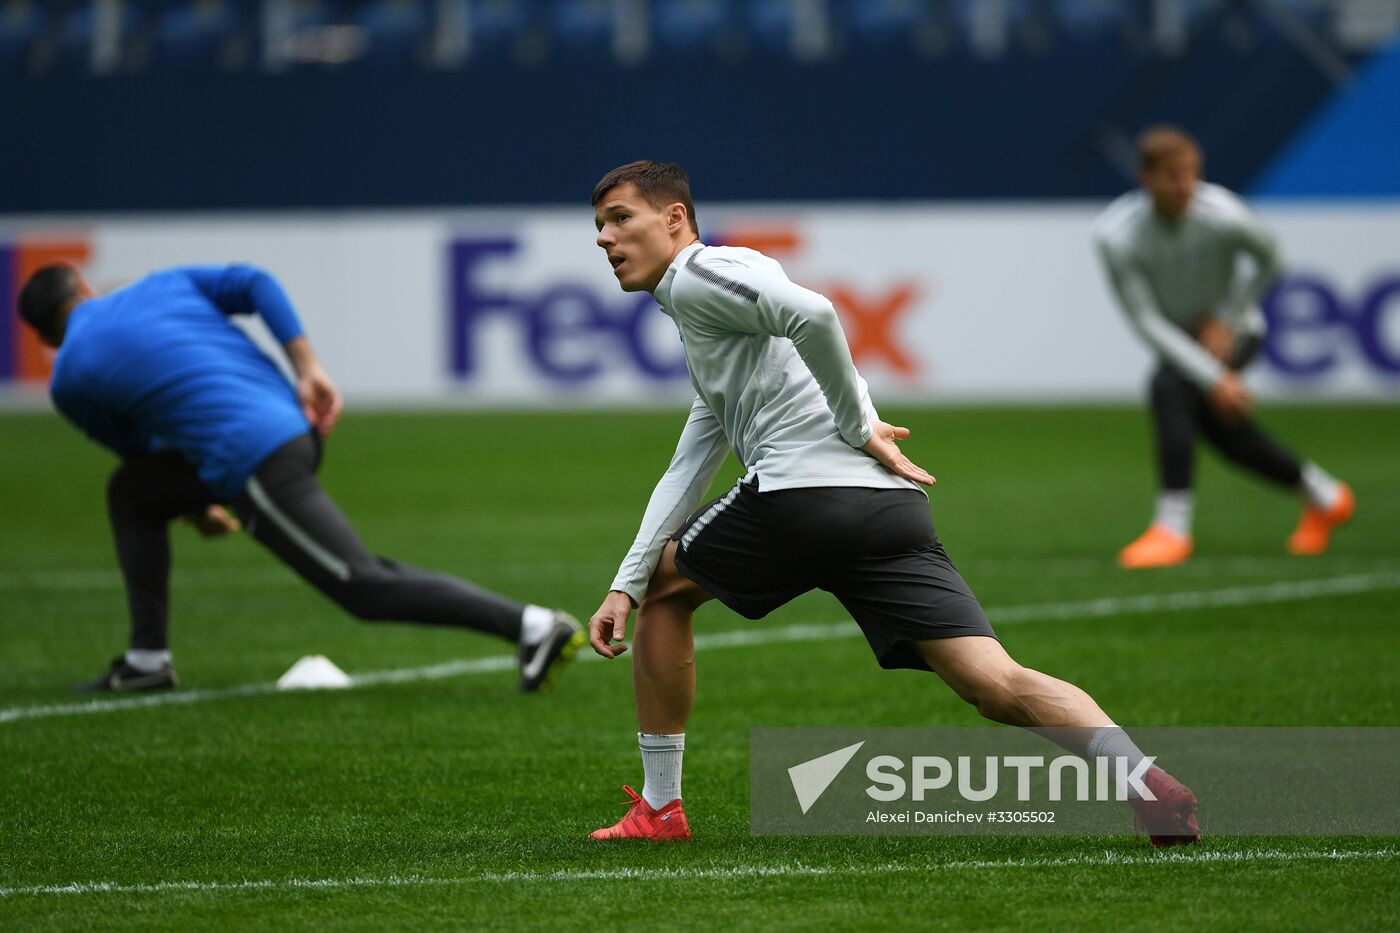 Football. UEFA Europa League. FC Zenit holds training session